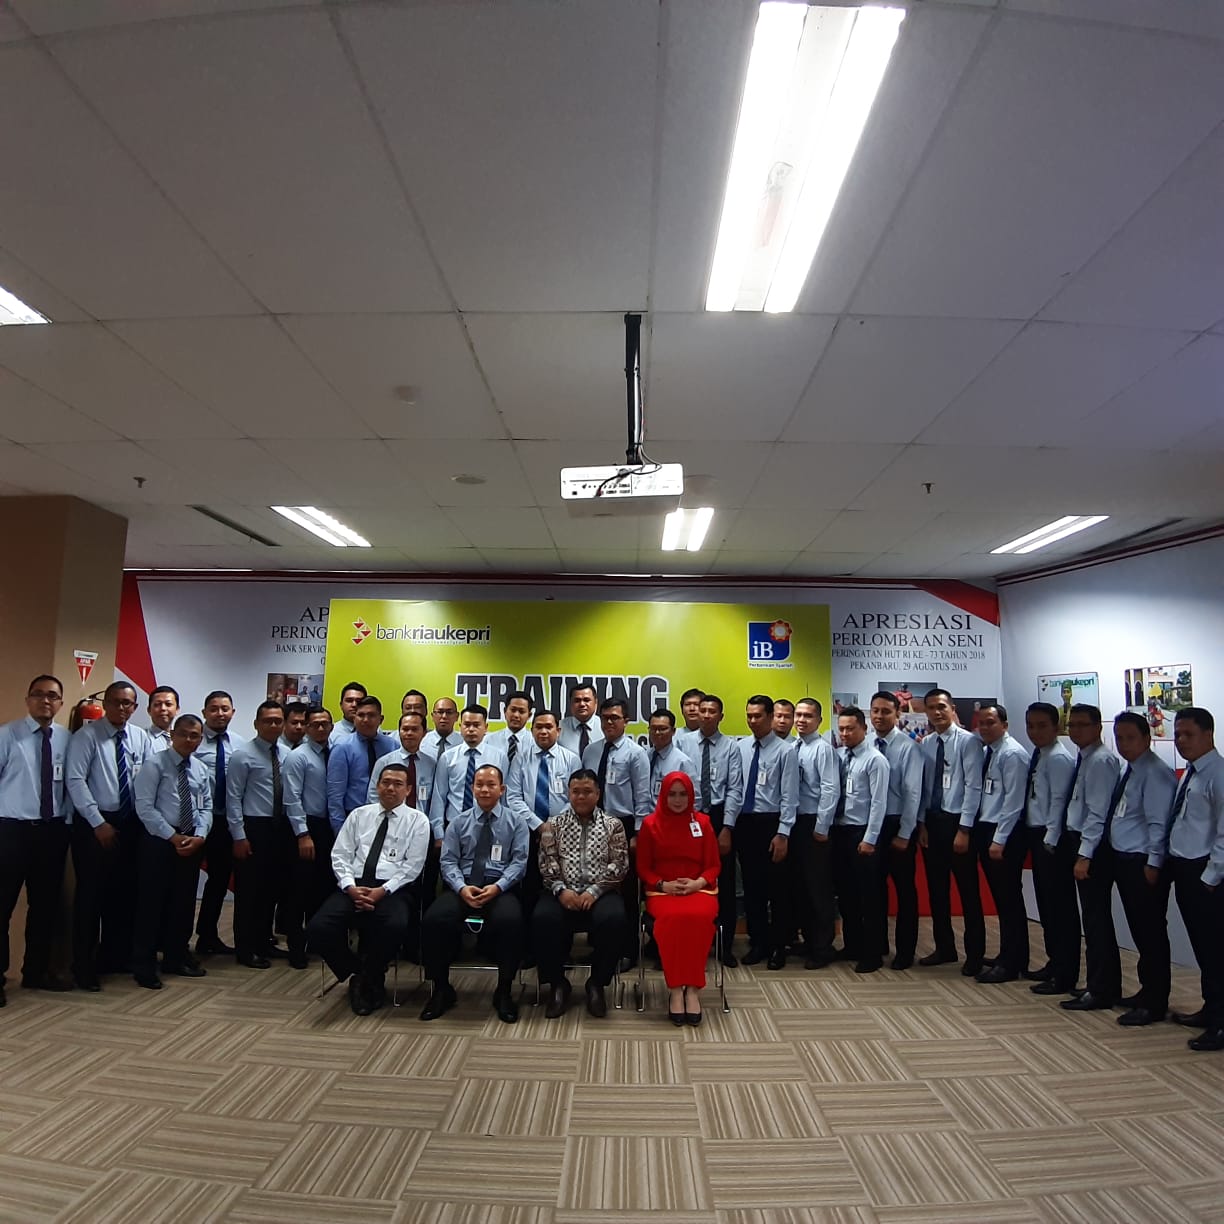 IB Overview for Unit Leader Bank Riau Kepri